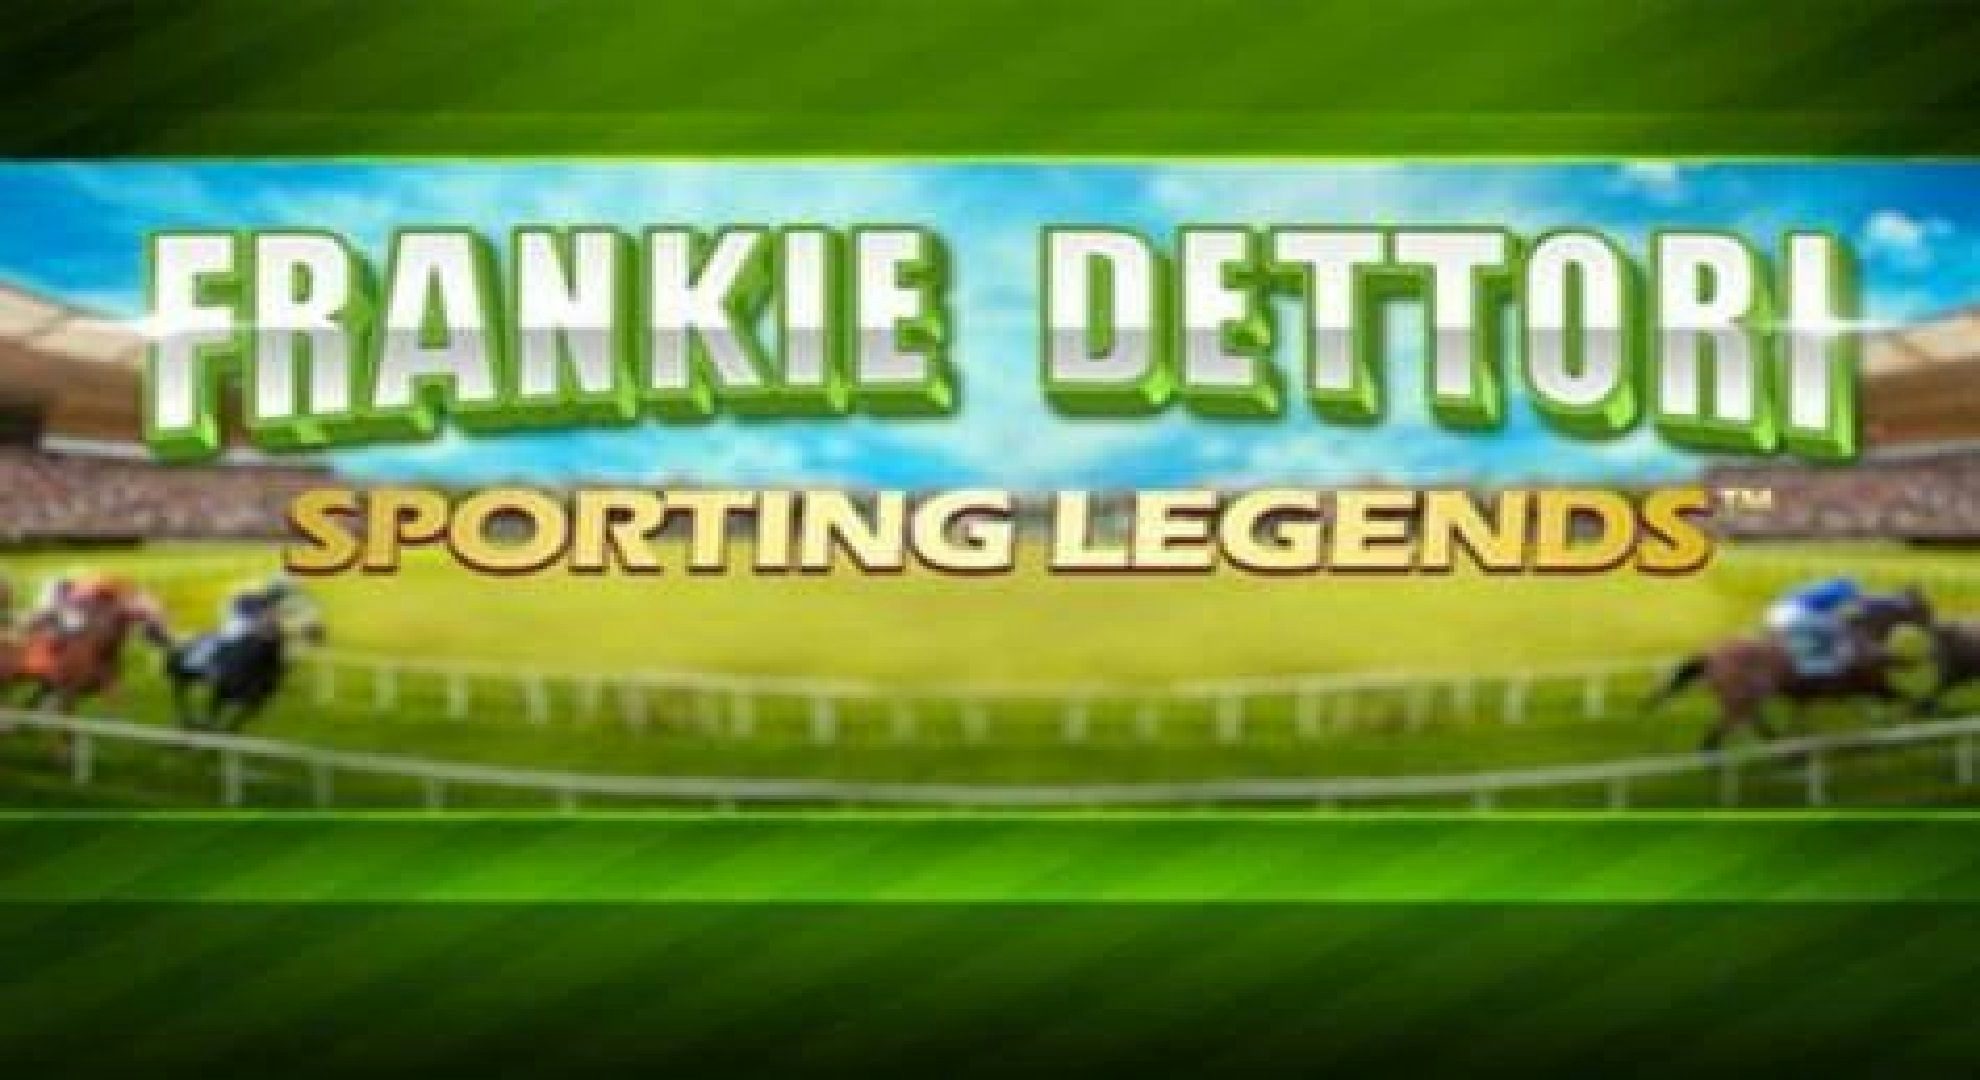 Frankie Dettori's Sporting Legends